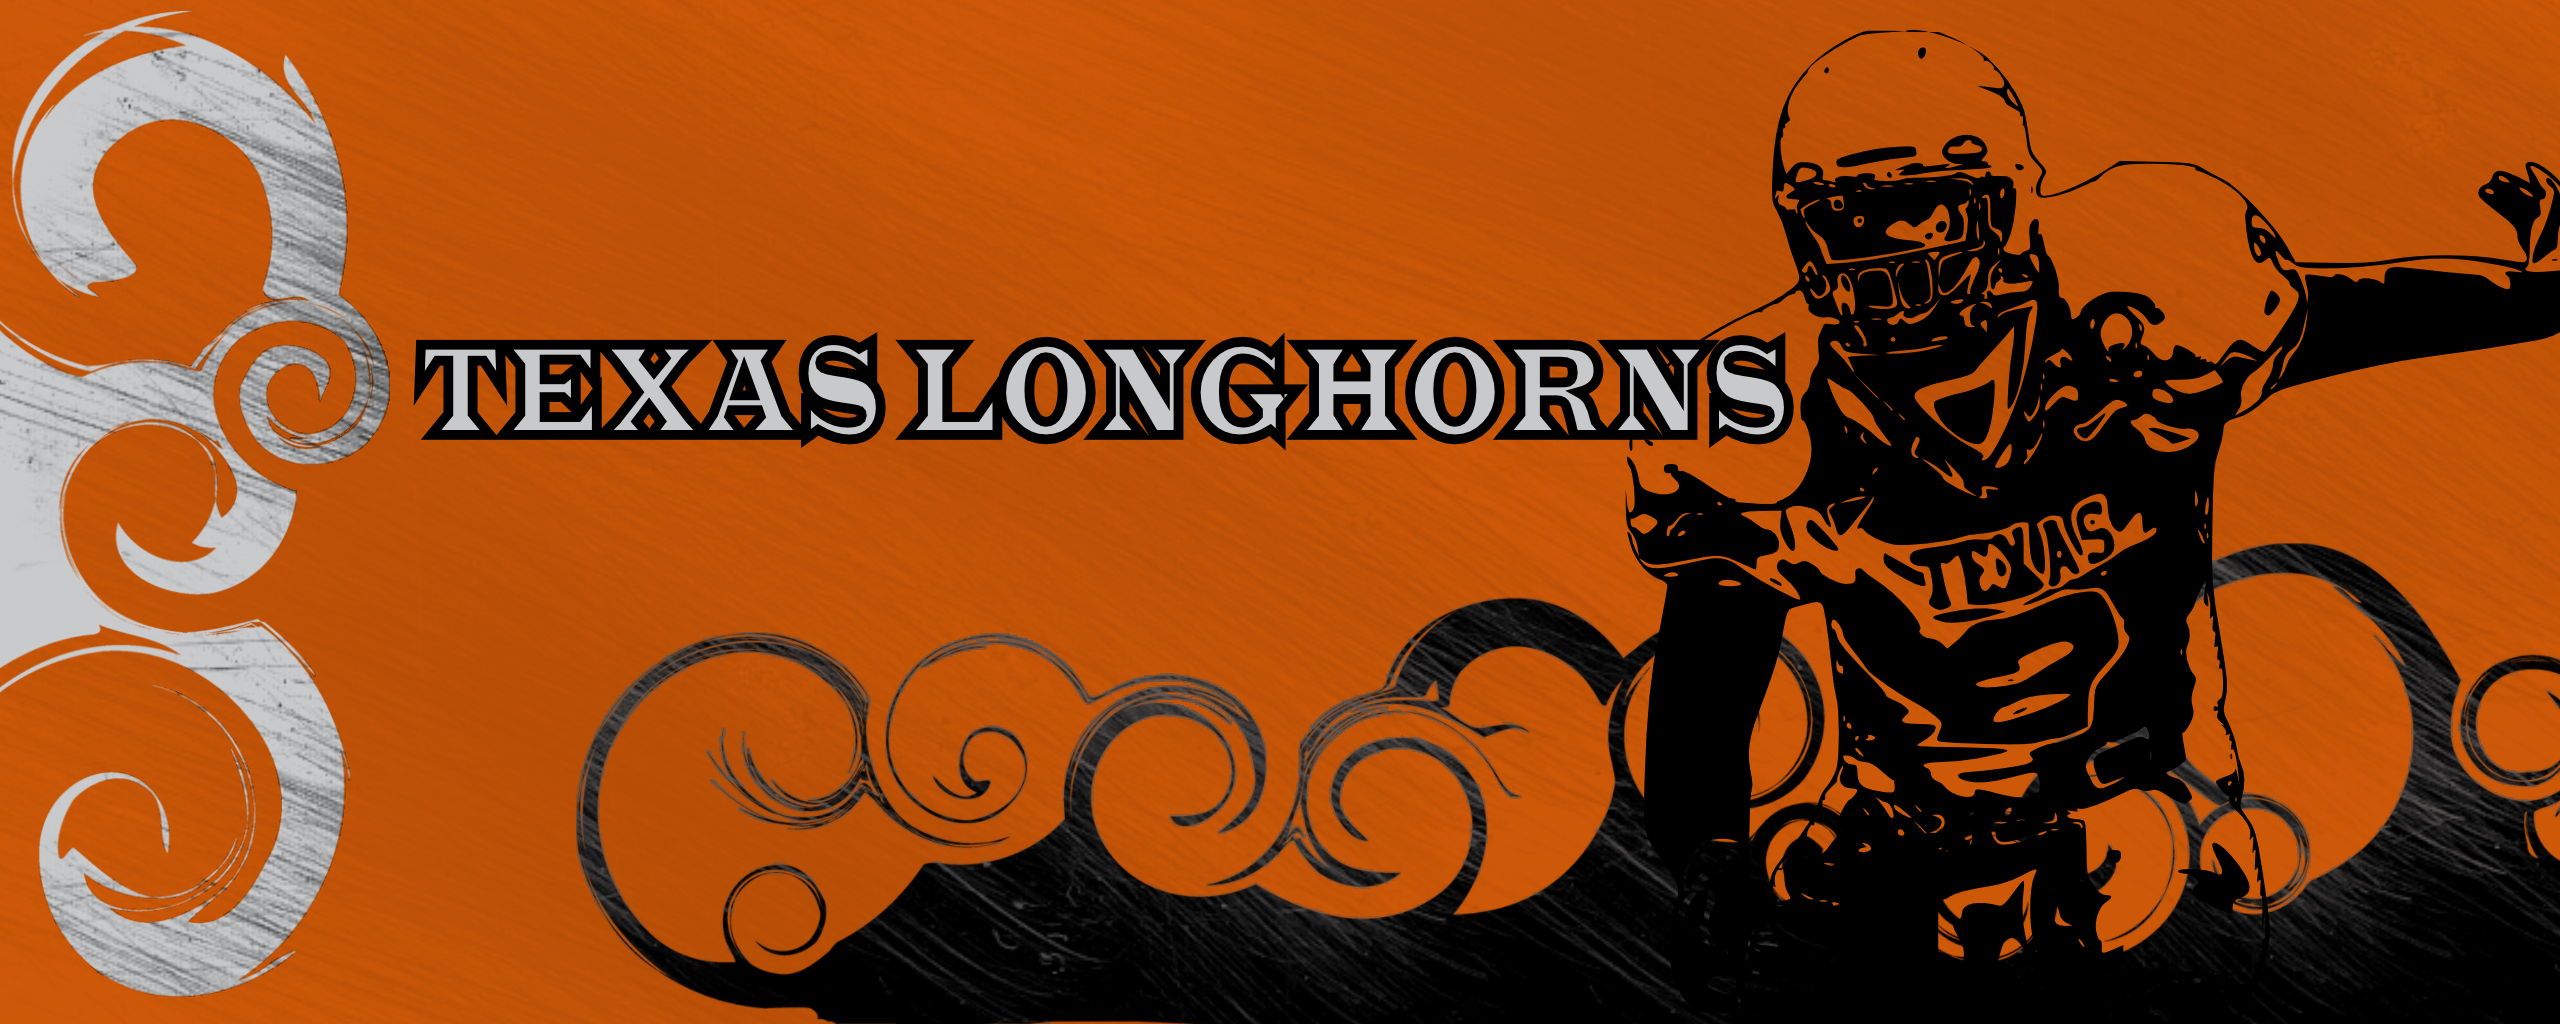 Texas Longhorns wallpaper by AlbinoFilthy on DeviantArt